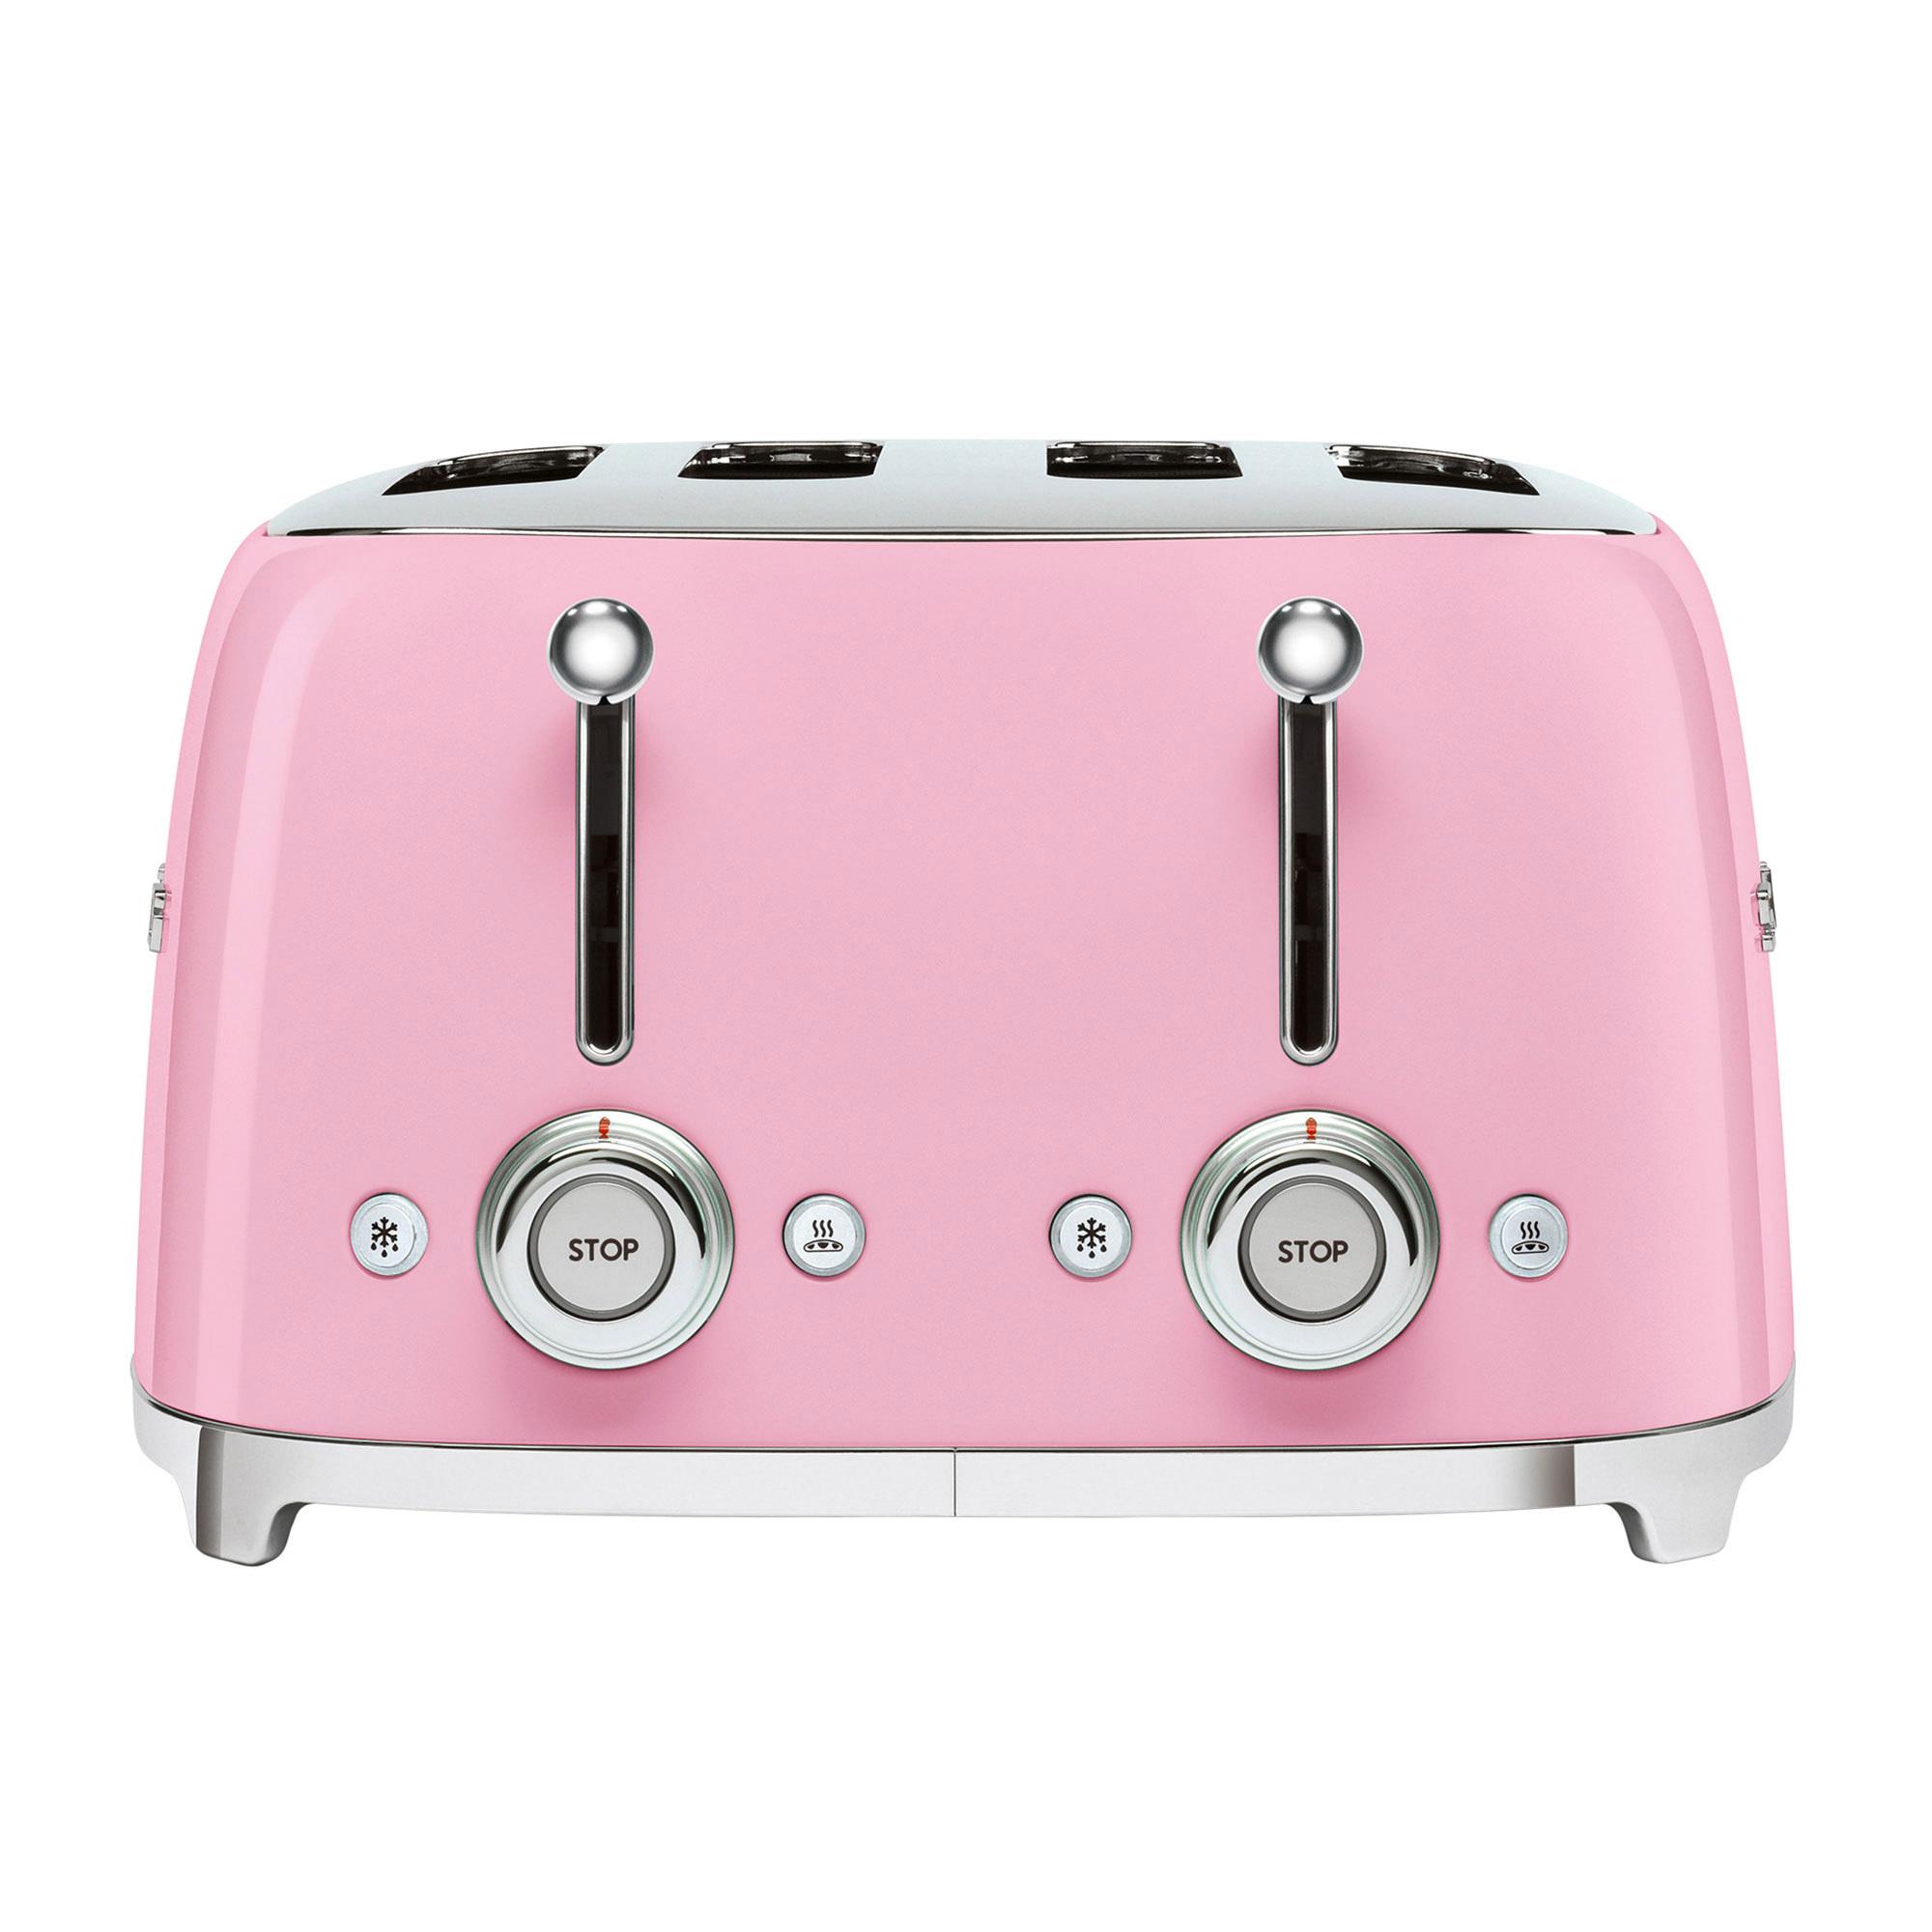 Smeg 50's Retro Style 4 Slot Toaster Pink Image 3